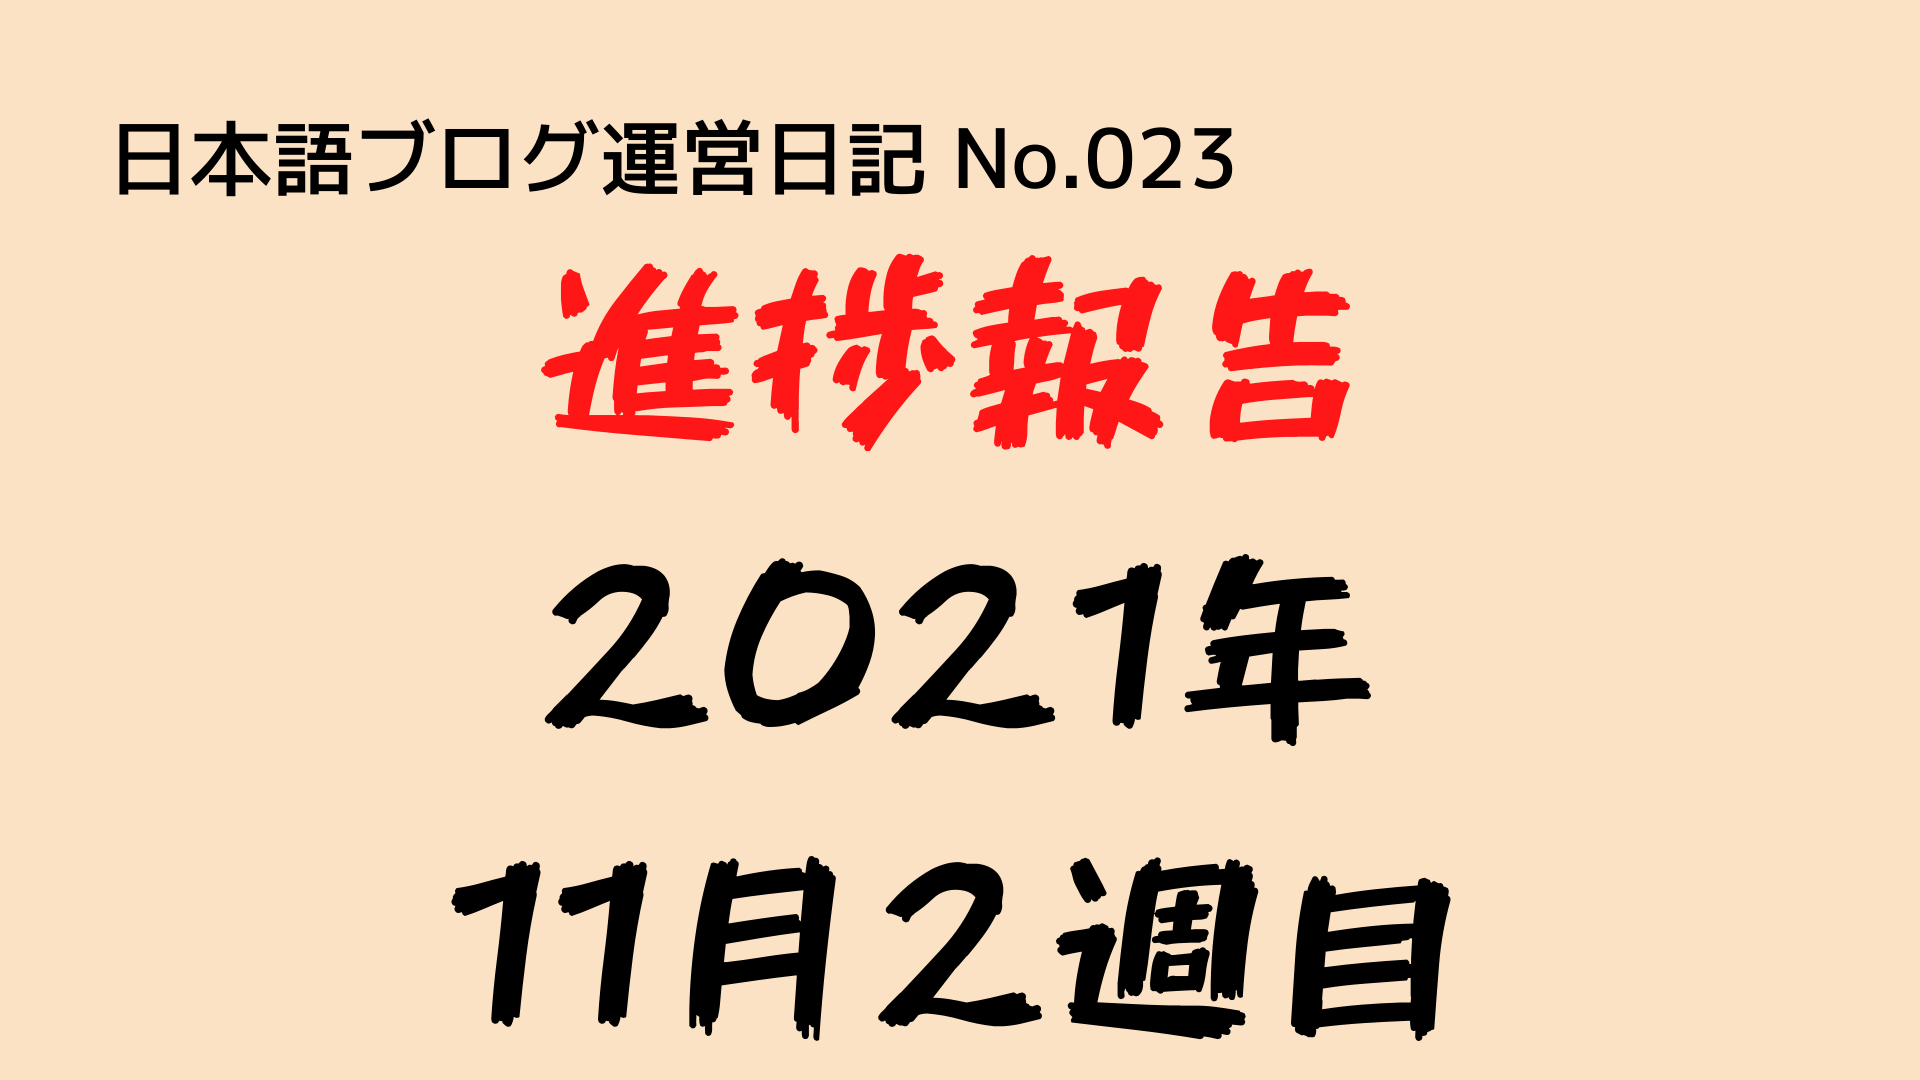 （日本語ブログ運営日記-No.023）進捗報告（2021年11月2週目：7日〜13日）：6日連続、投稿数0！